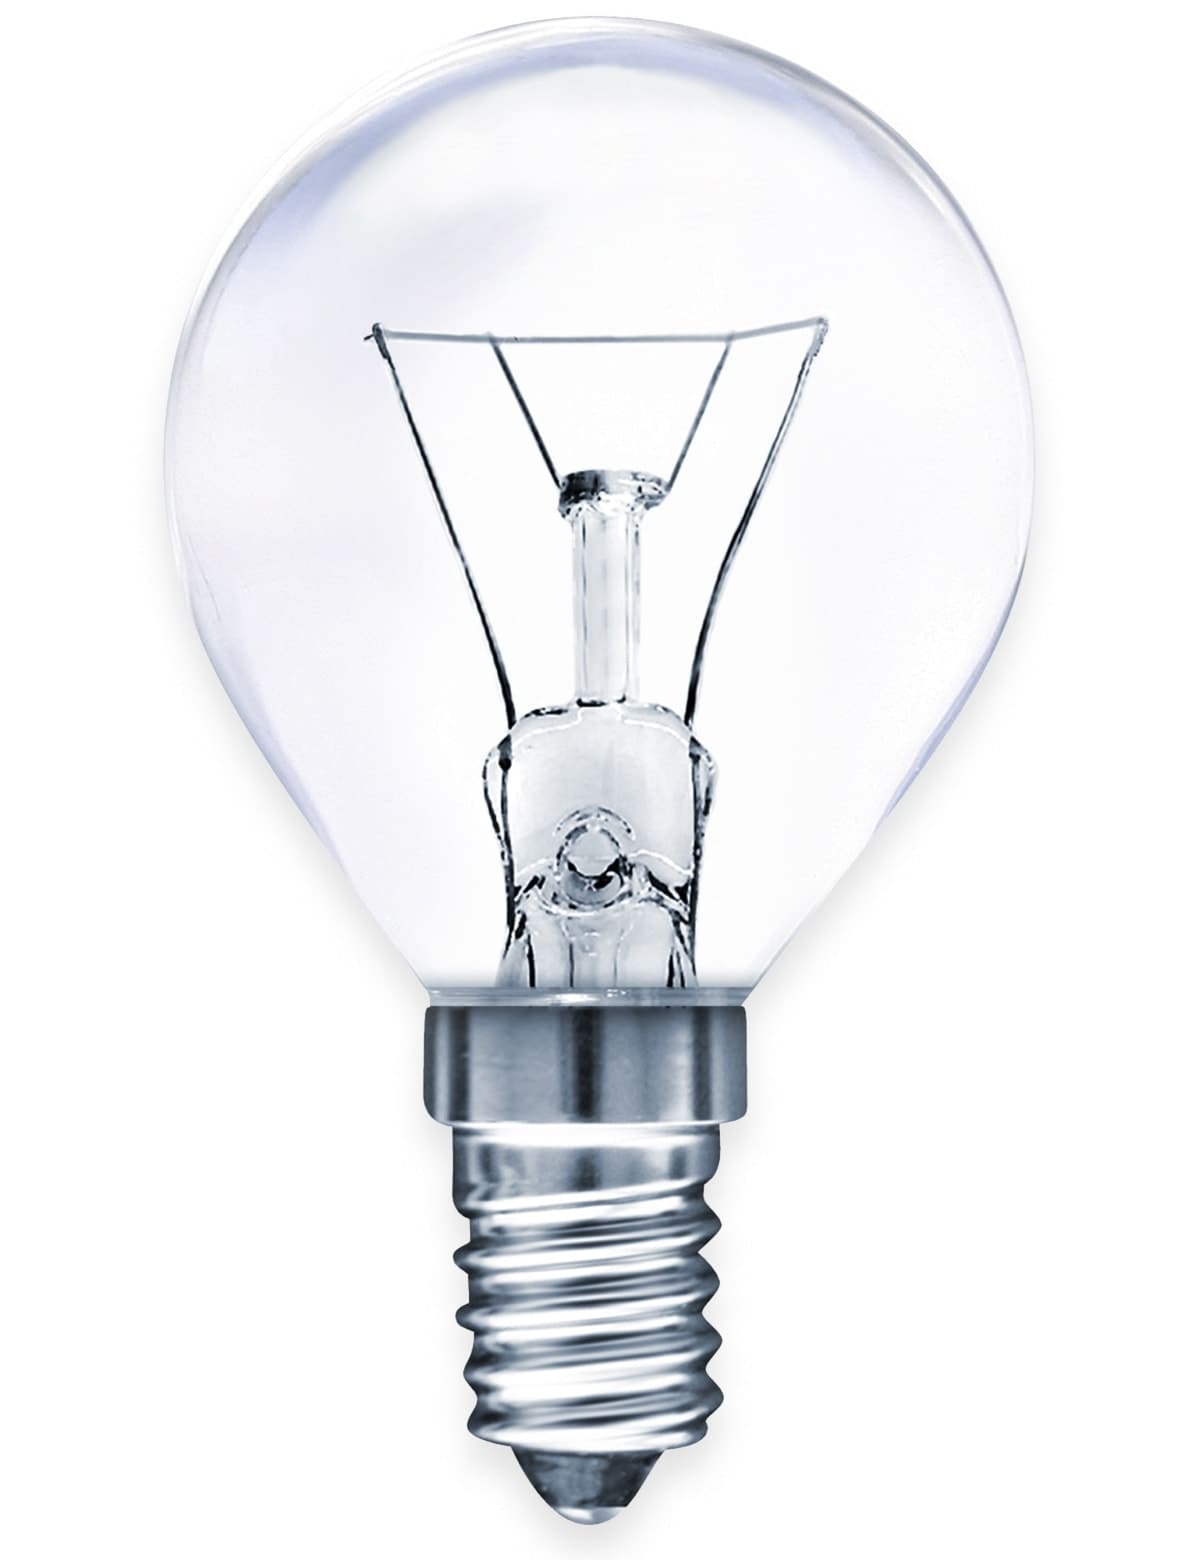 MÜLLER-LICHT AGL, Backofenlampe, 100008B, G45, 25W, klar, dimmbar